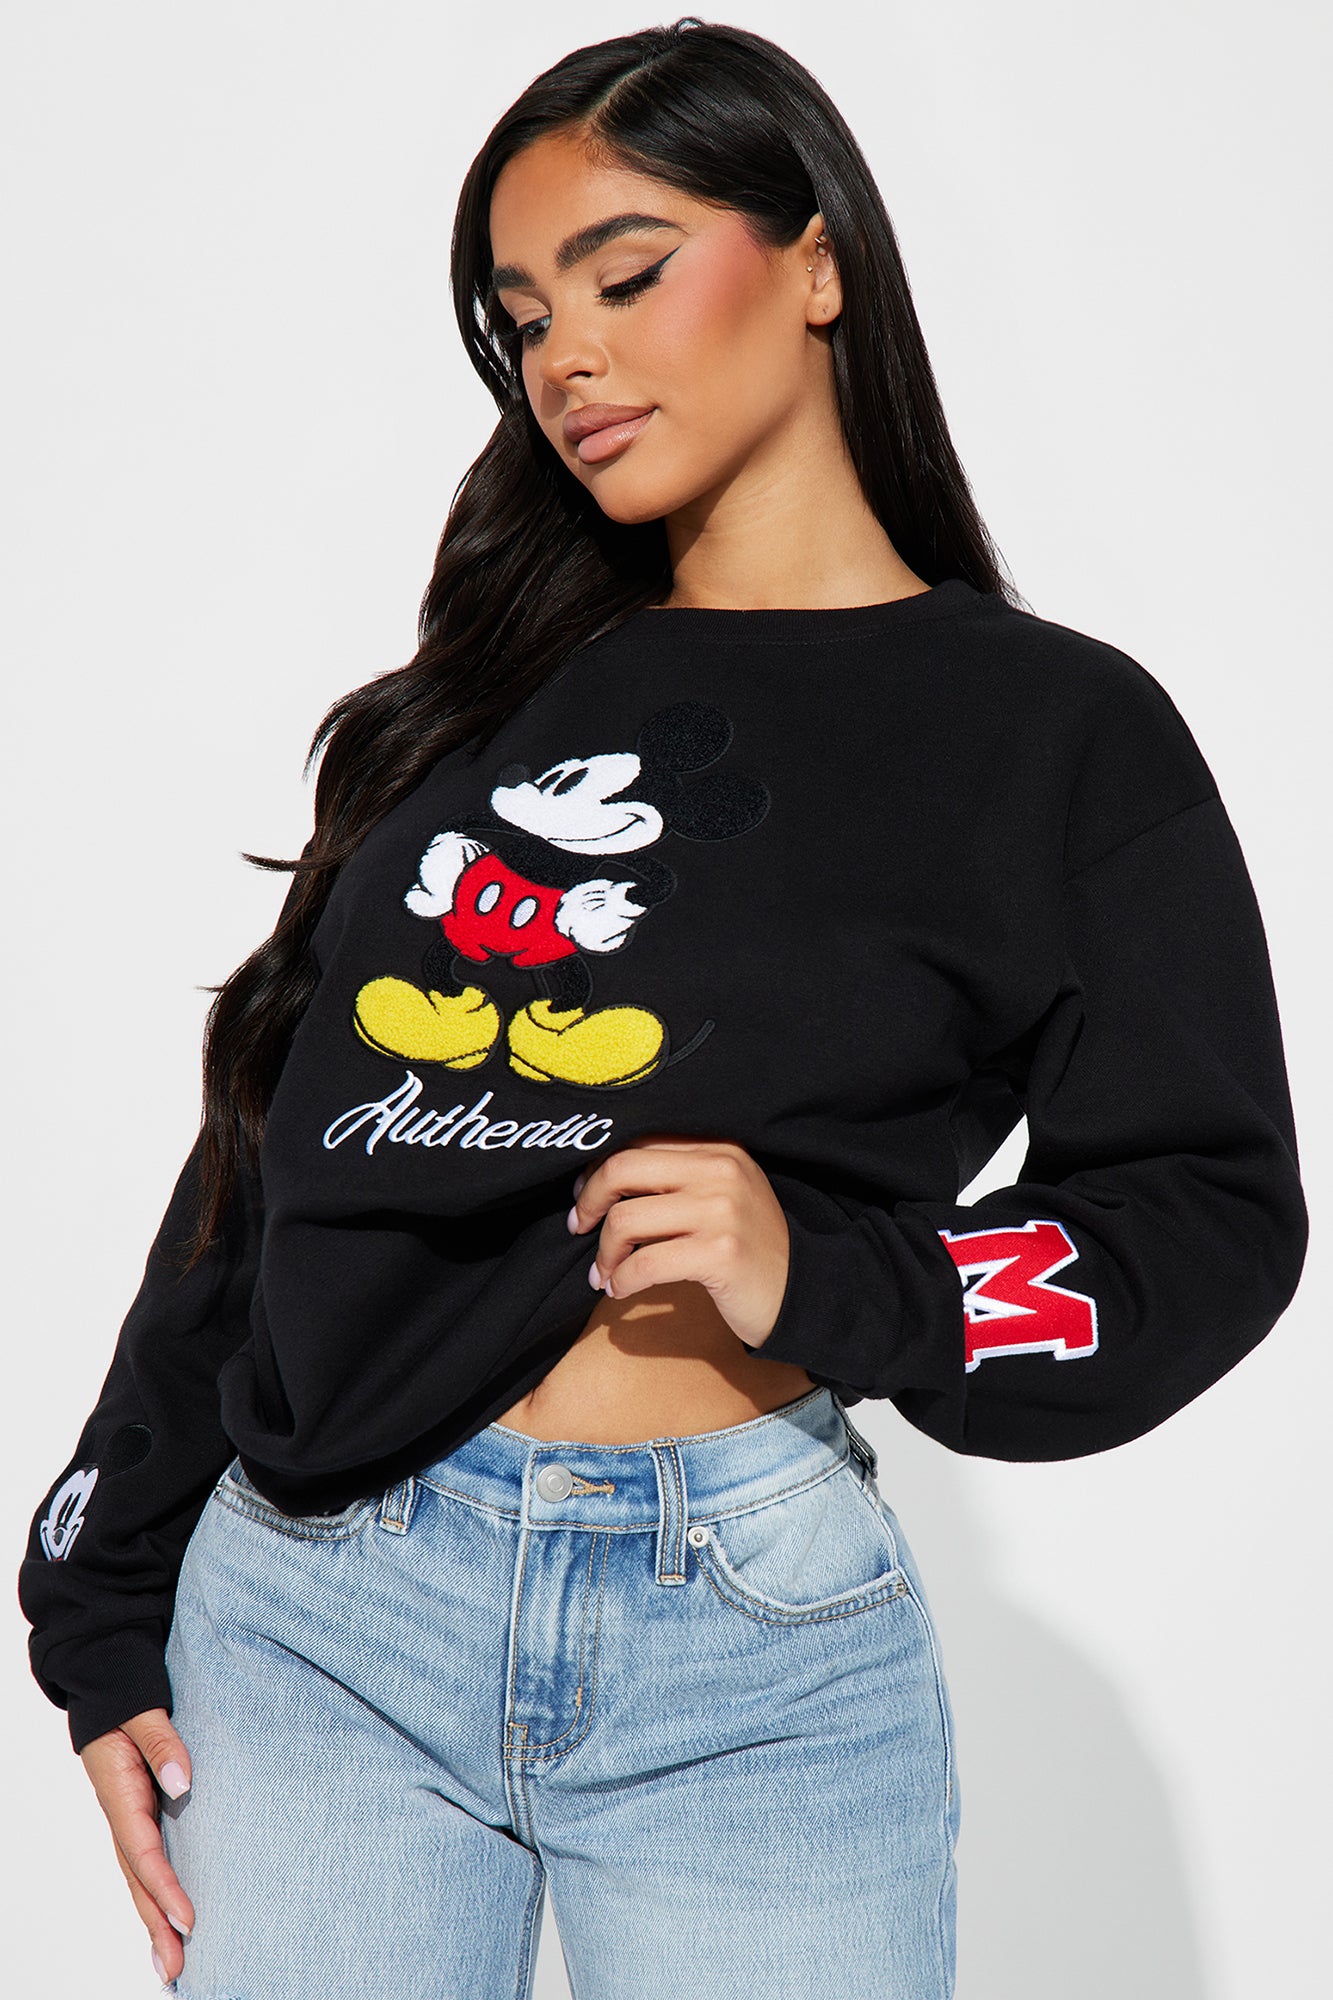 NWT CQ x Mickey 2.0 Sweatshirt Black XL, Women's Fashion, Tops, Other Tops  on Carousell